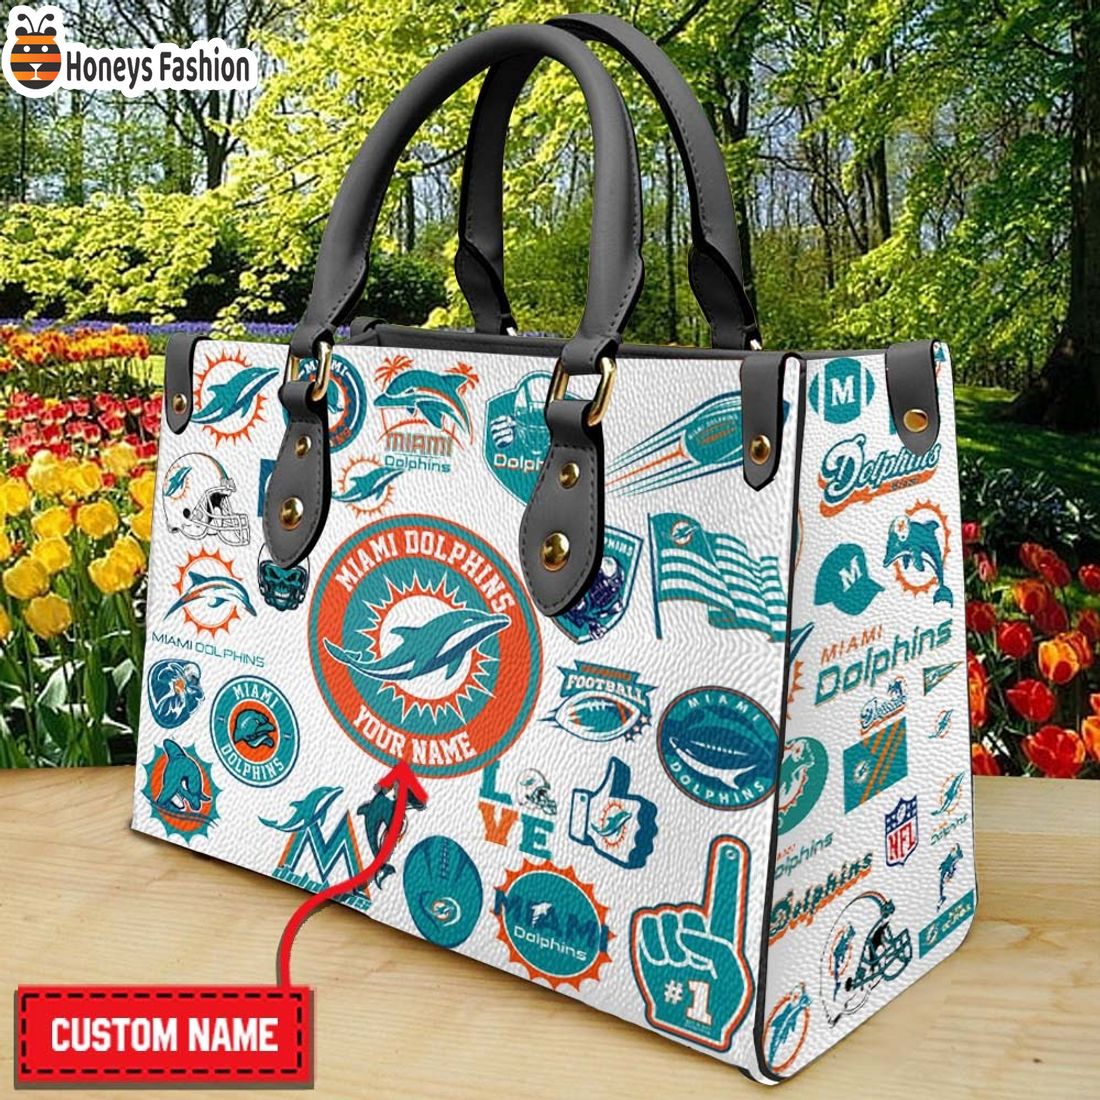 Miami Dolphins Personalized Leather Handbag